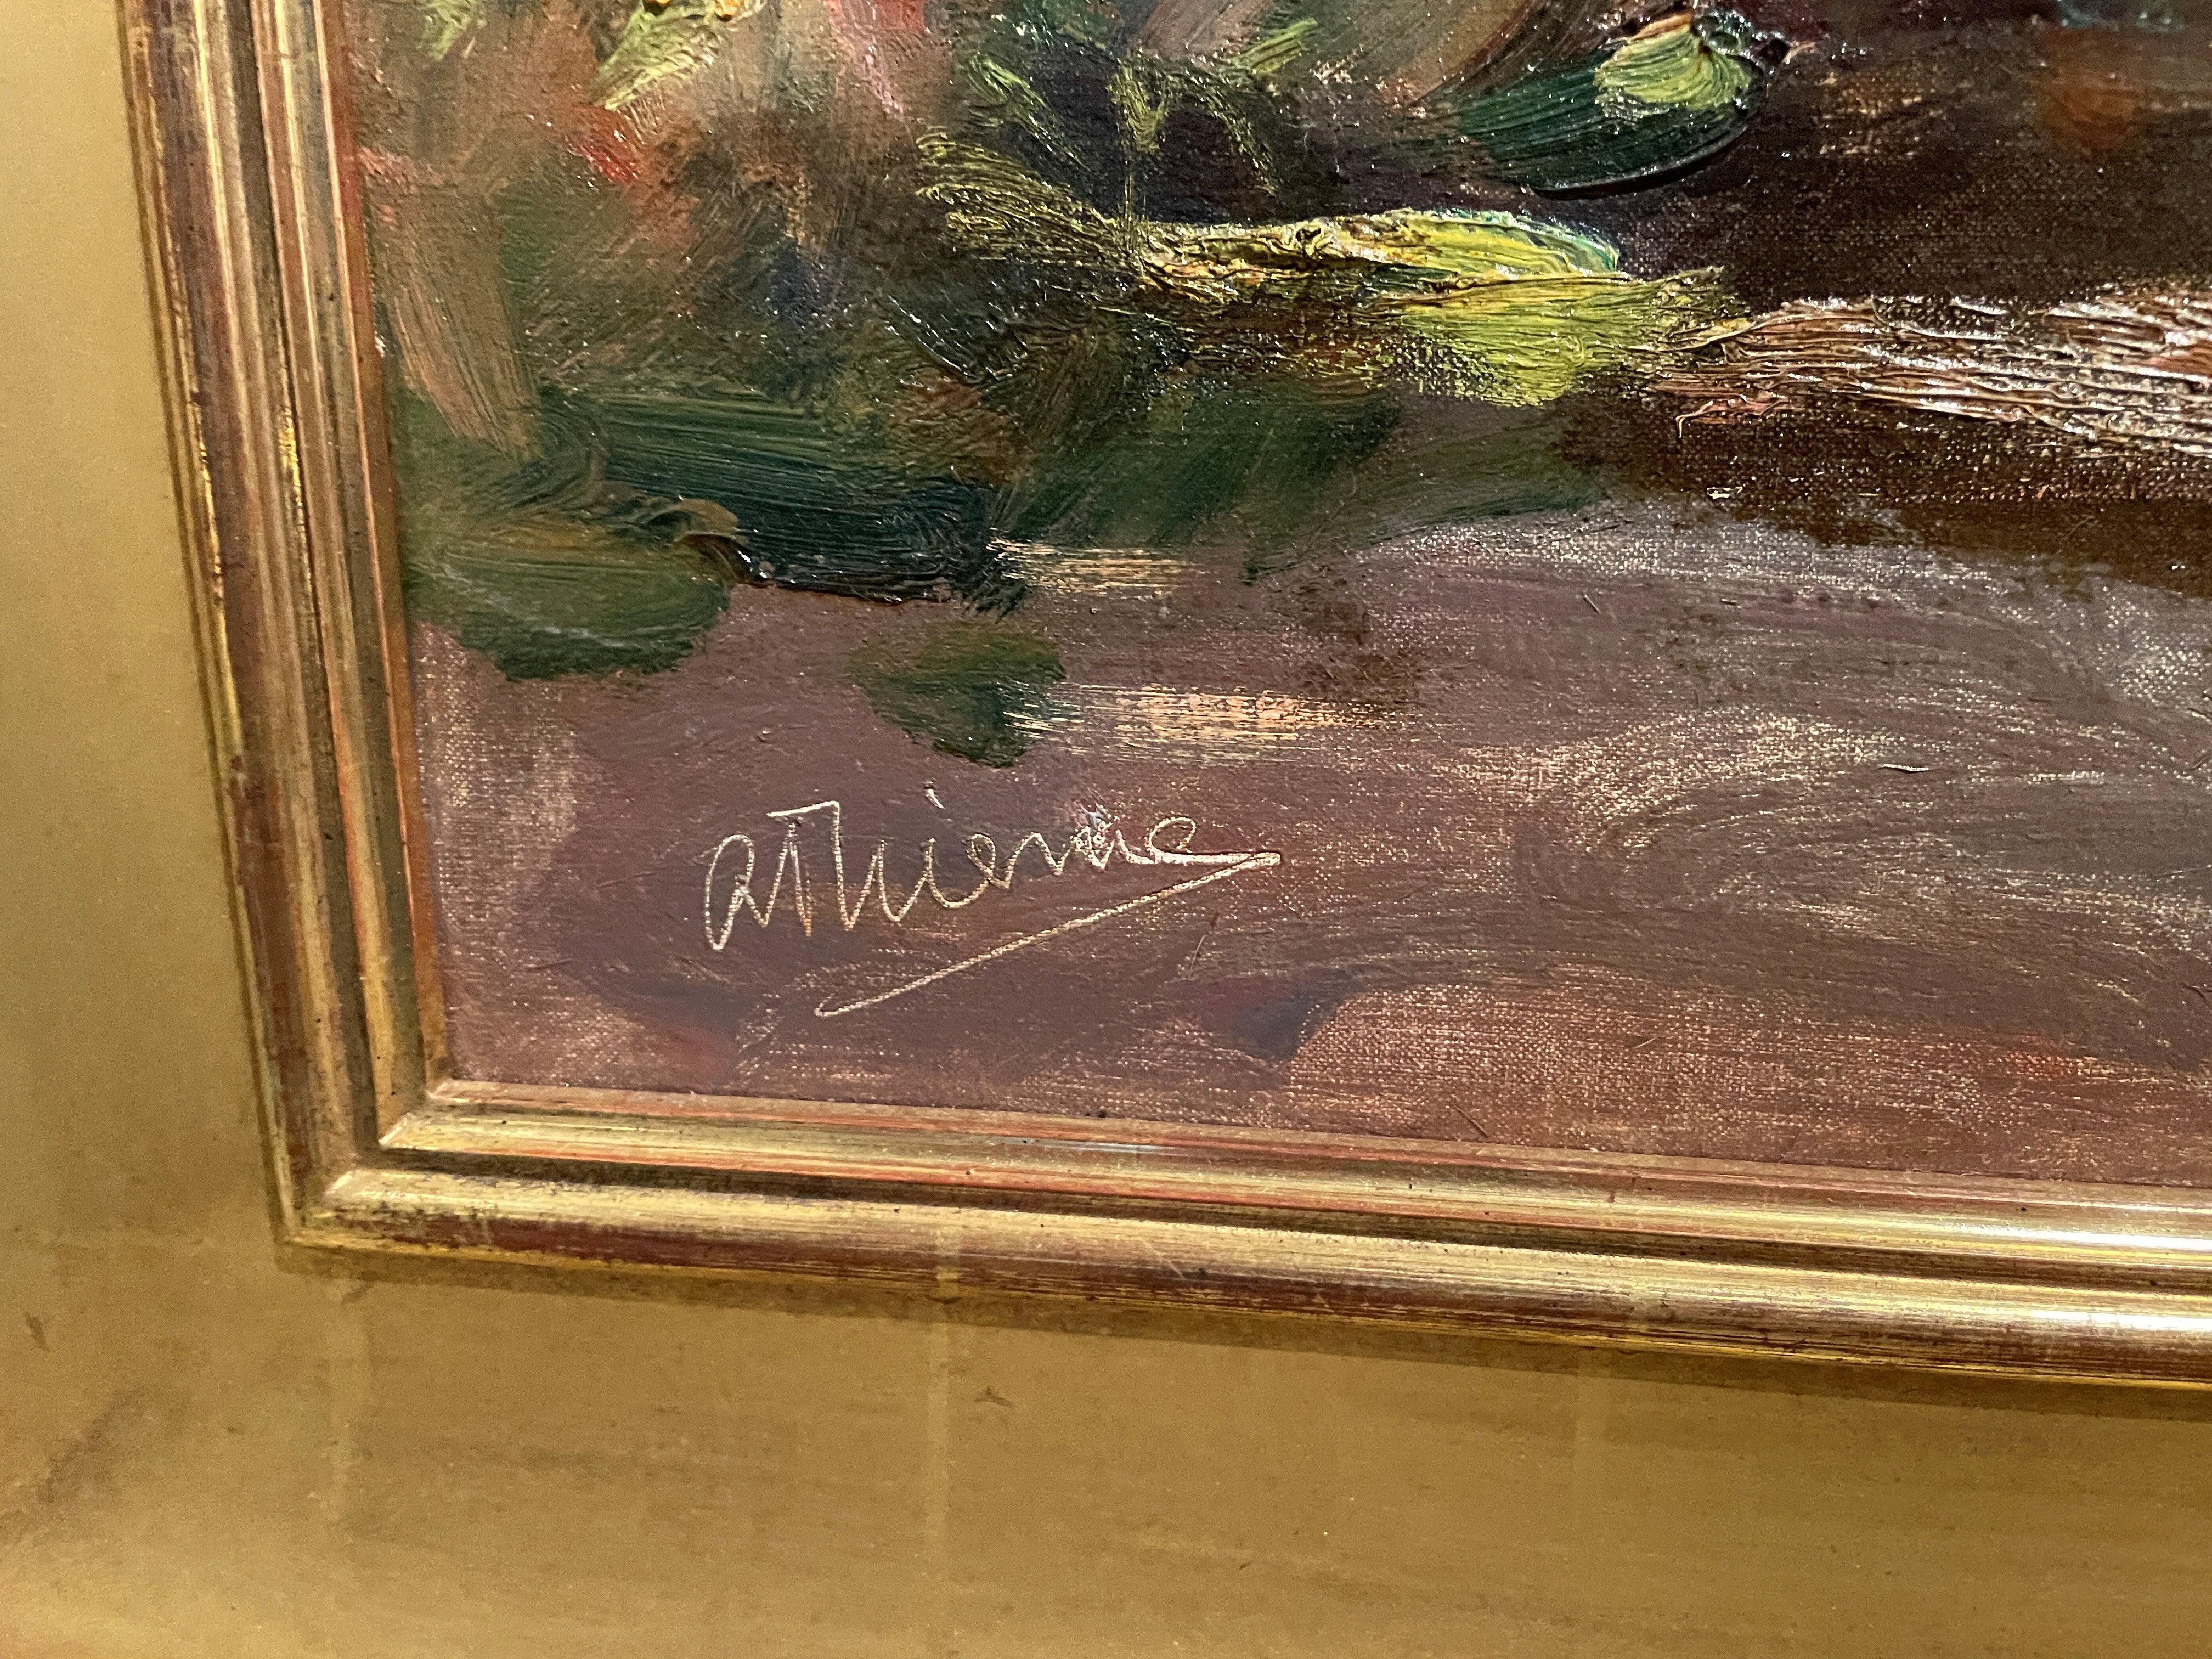 anthony thieme signature